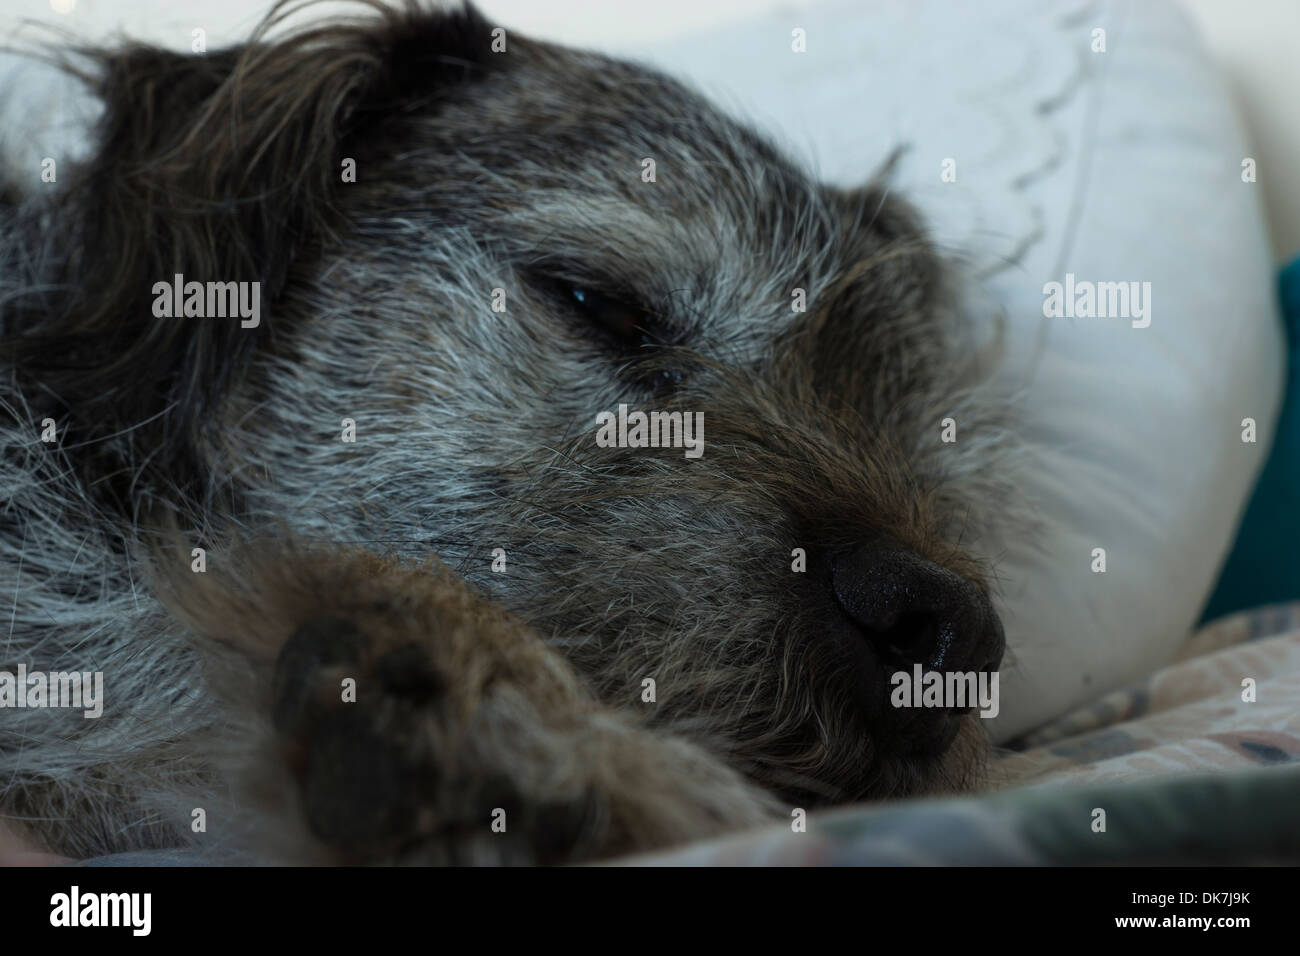 borer terrier dog face nose long hair bed resting Stock Photo